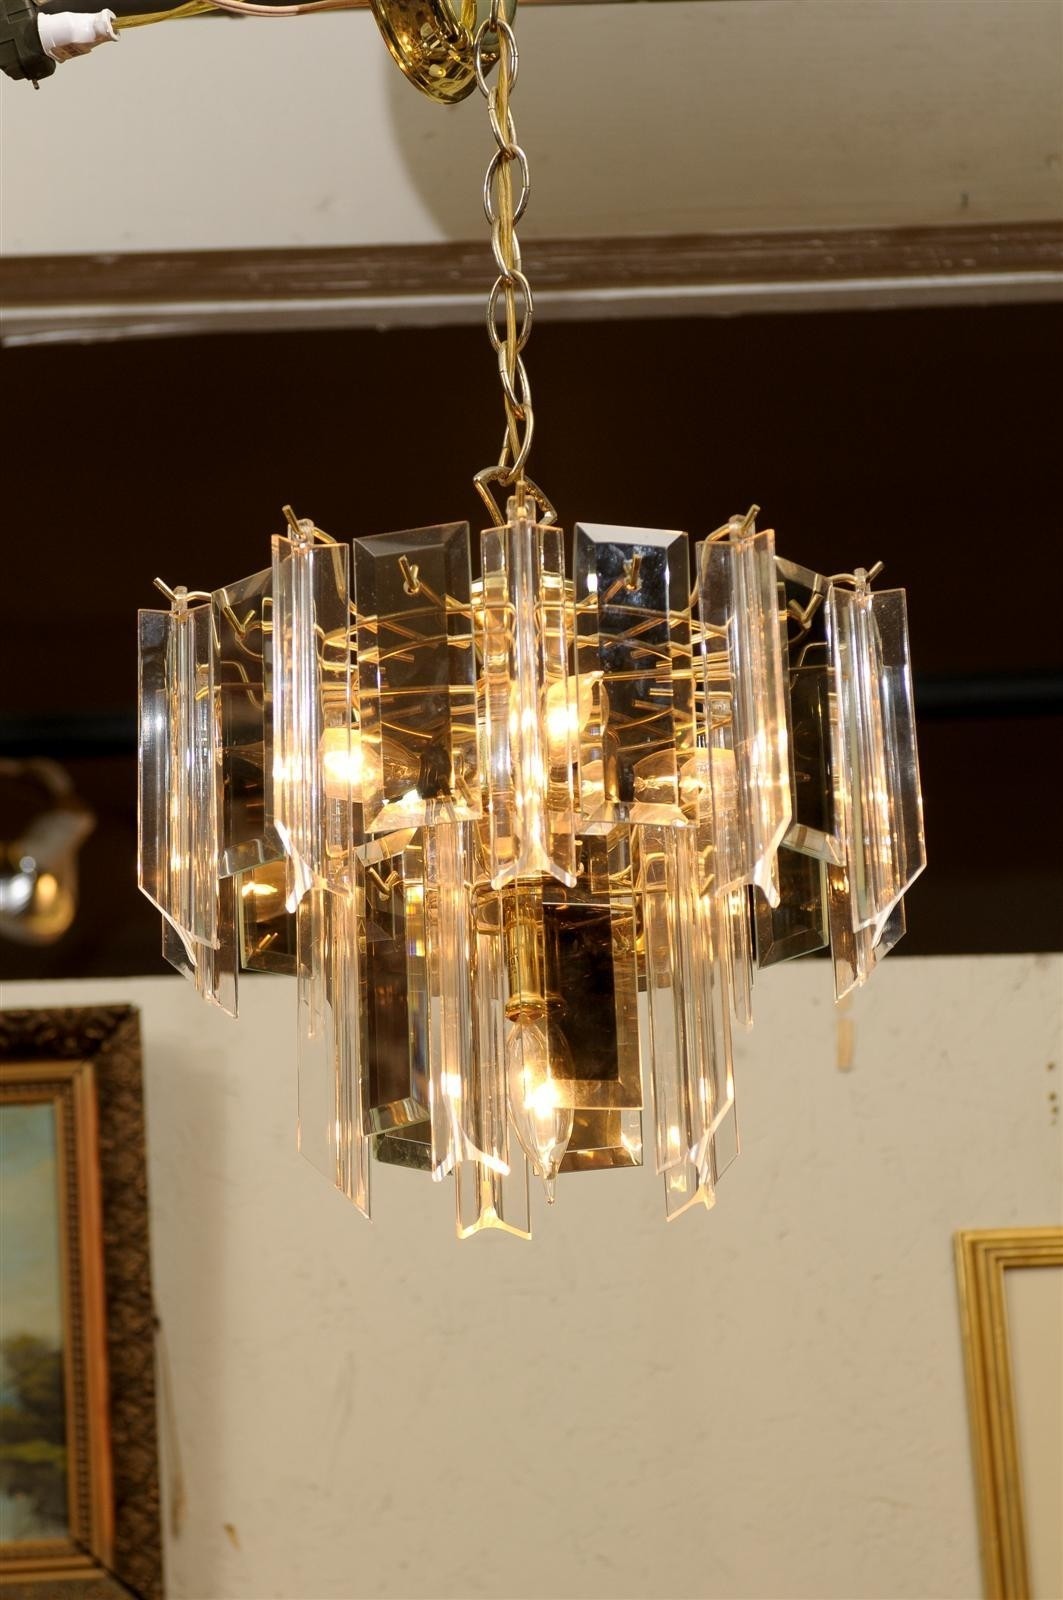 15 photos brass and glass chandelier chandelier ideas